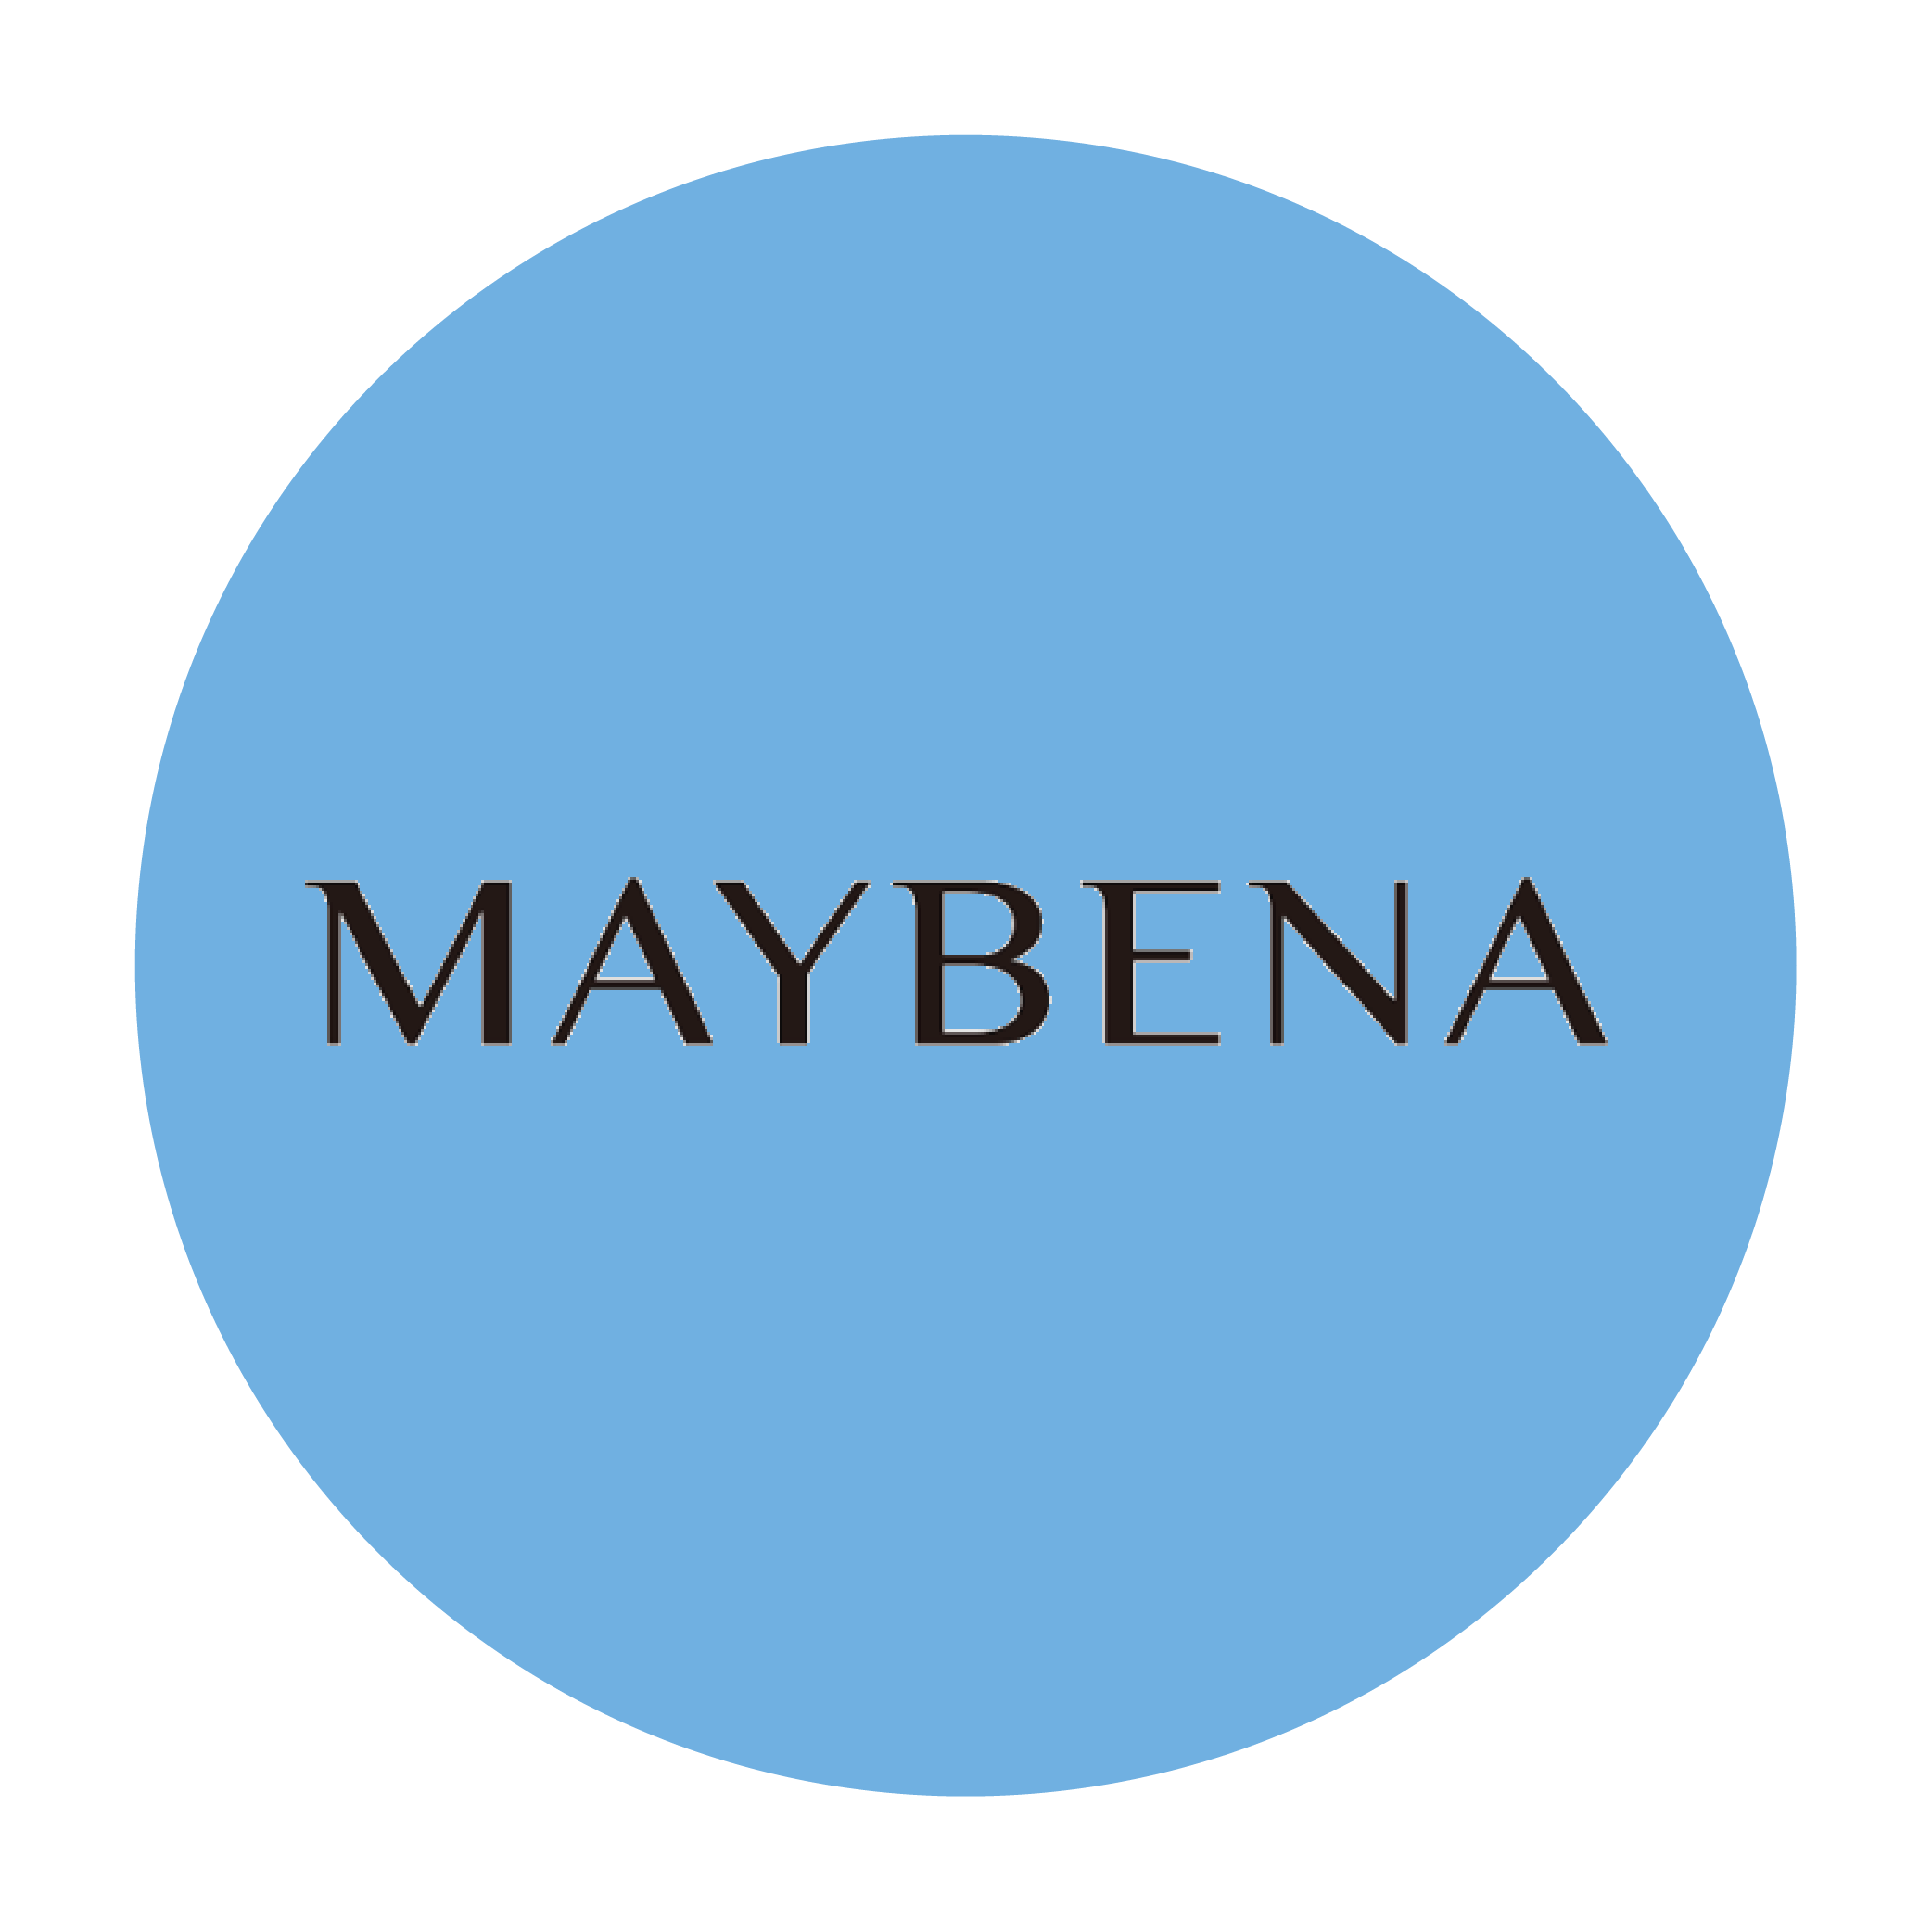 Maybena